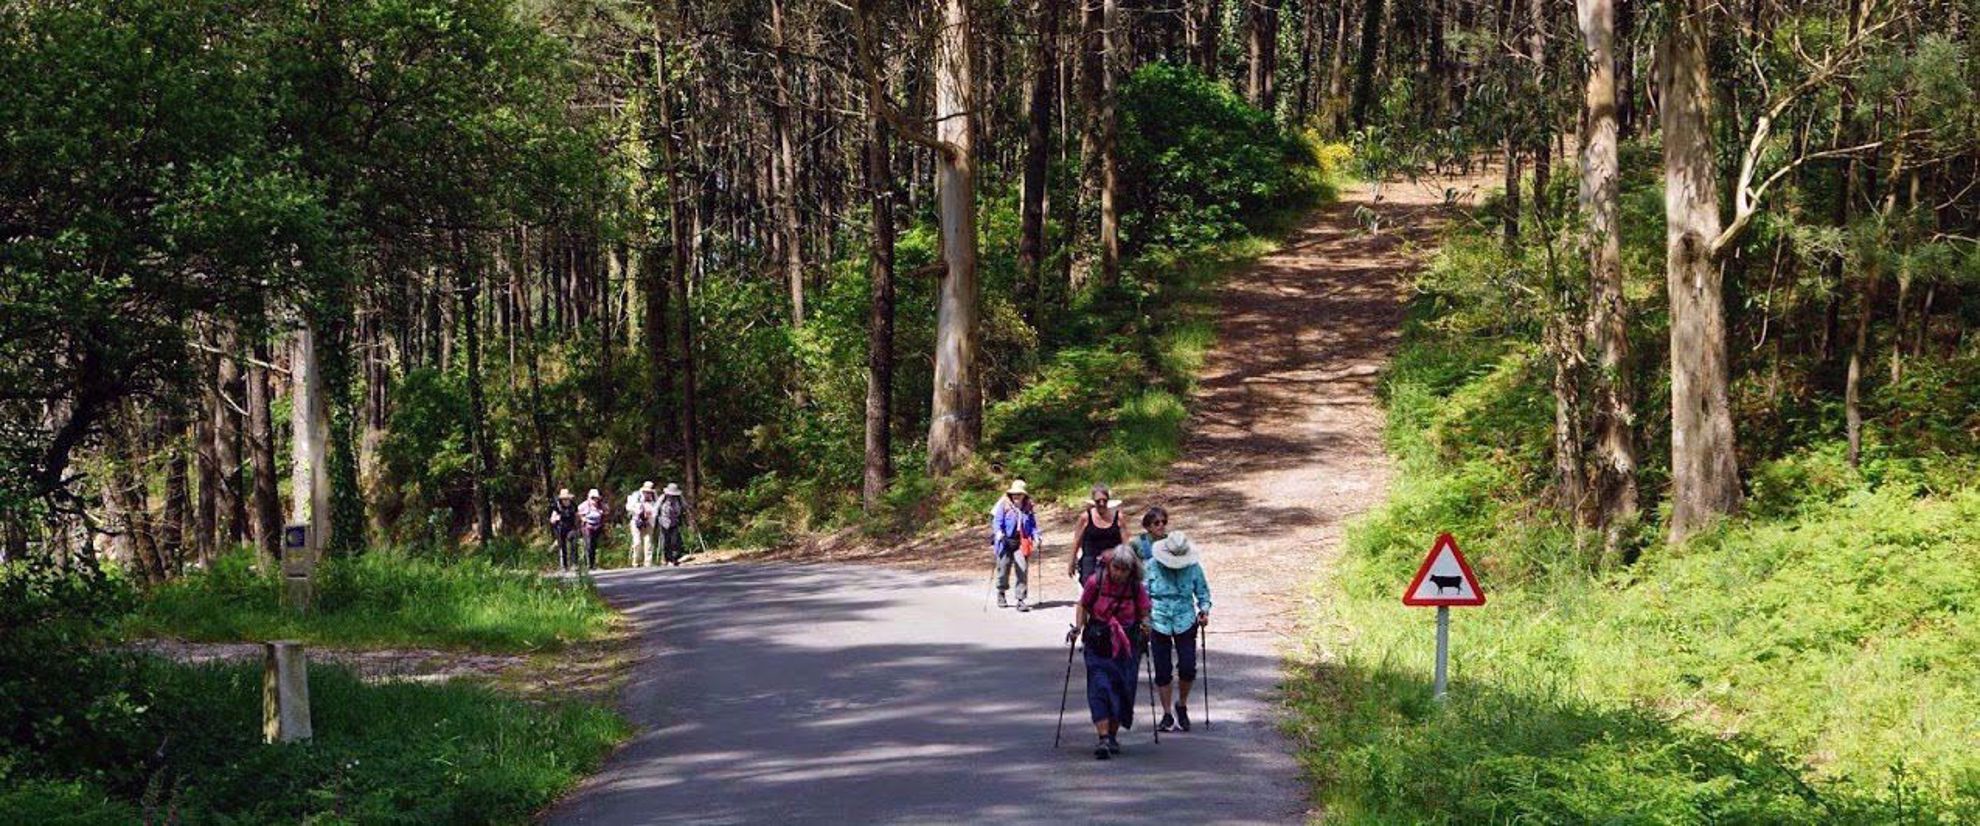 Women's group tour hiking the camino de santiago